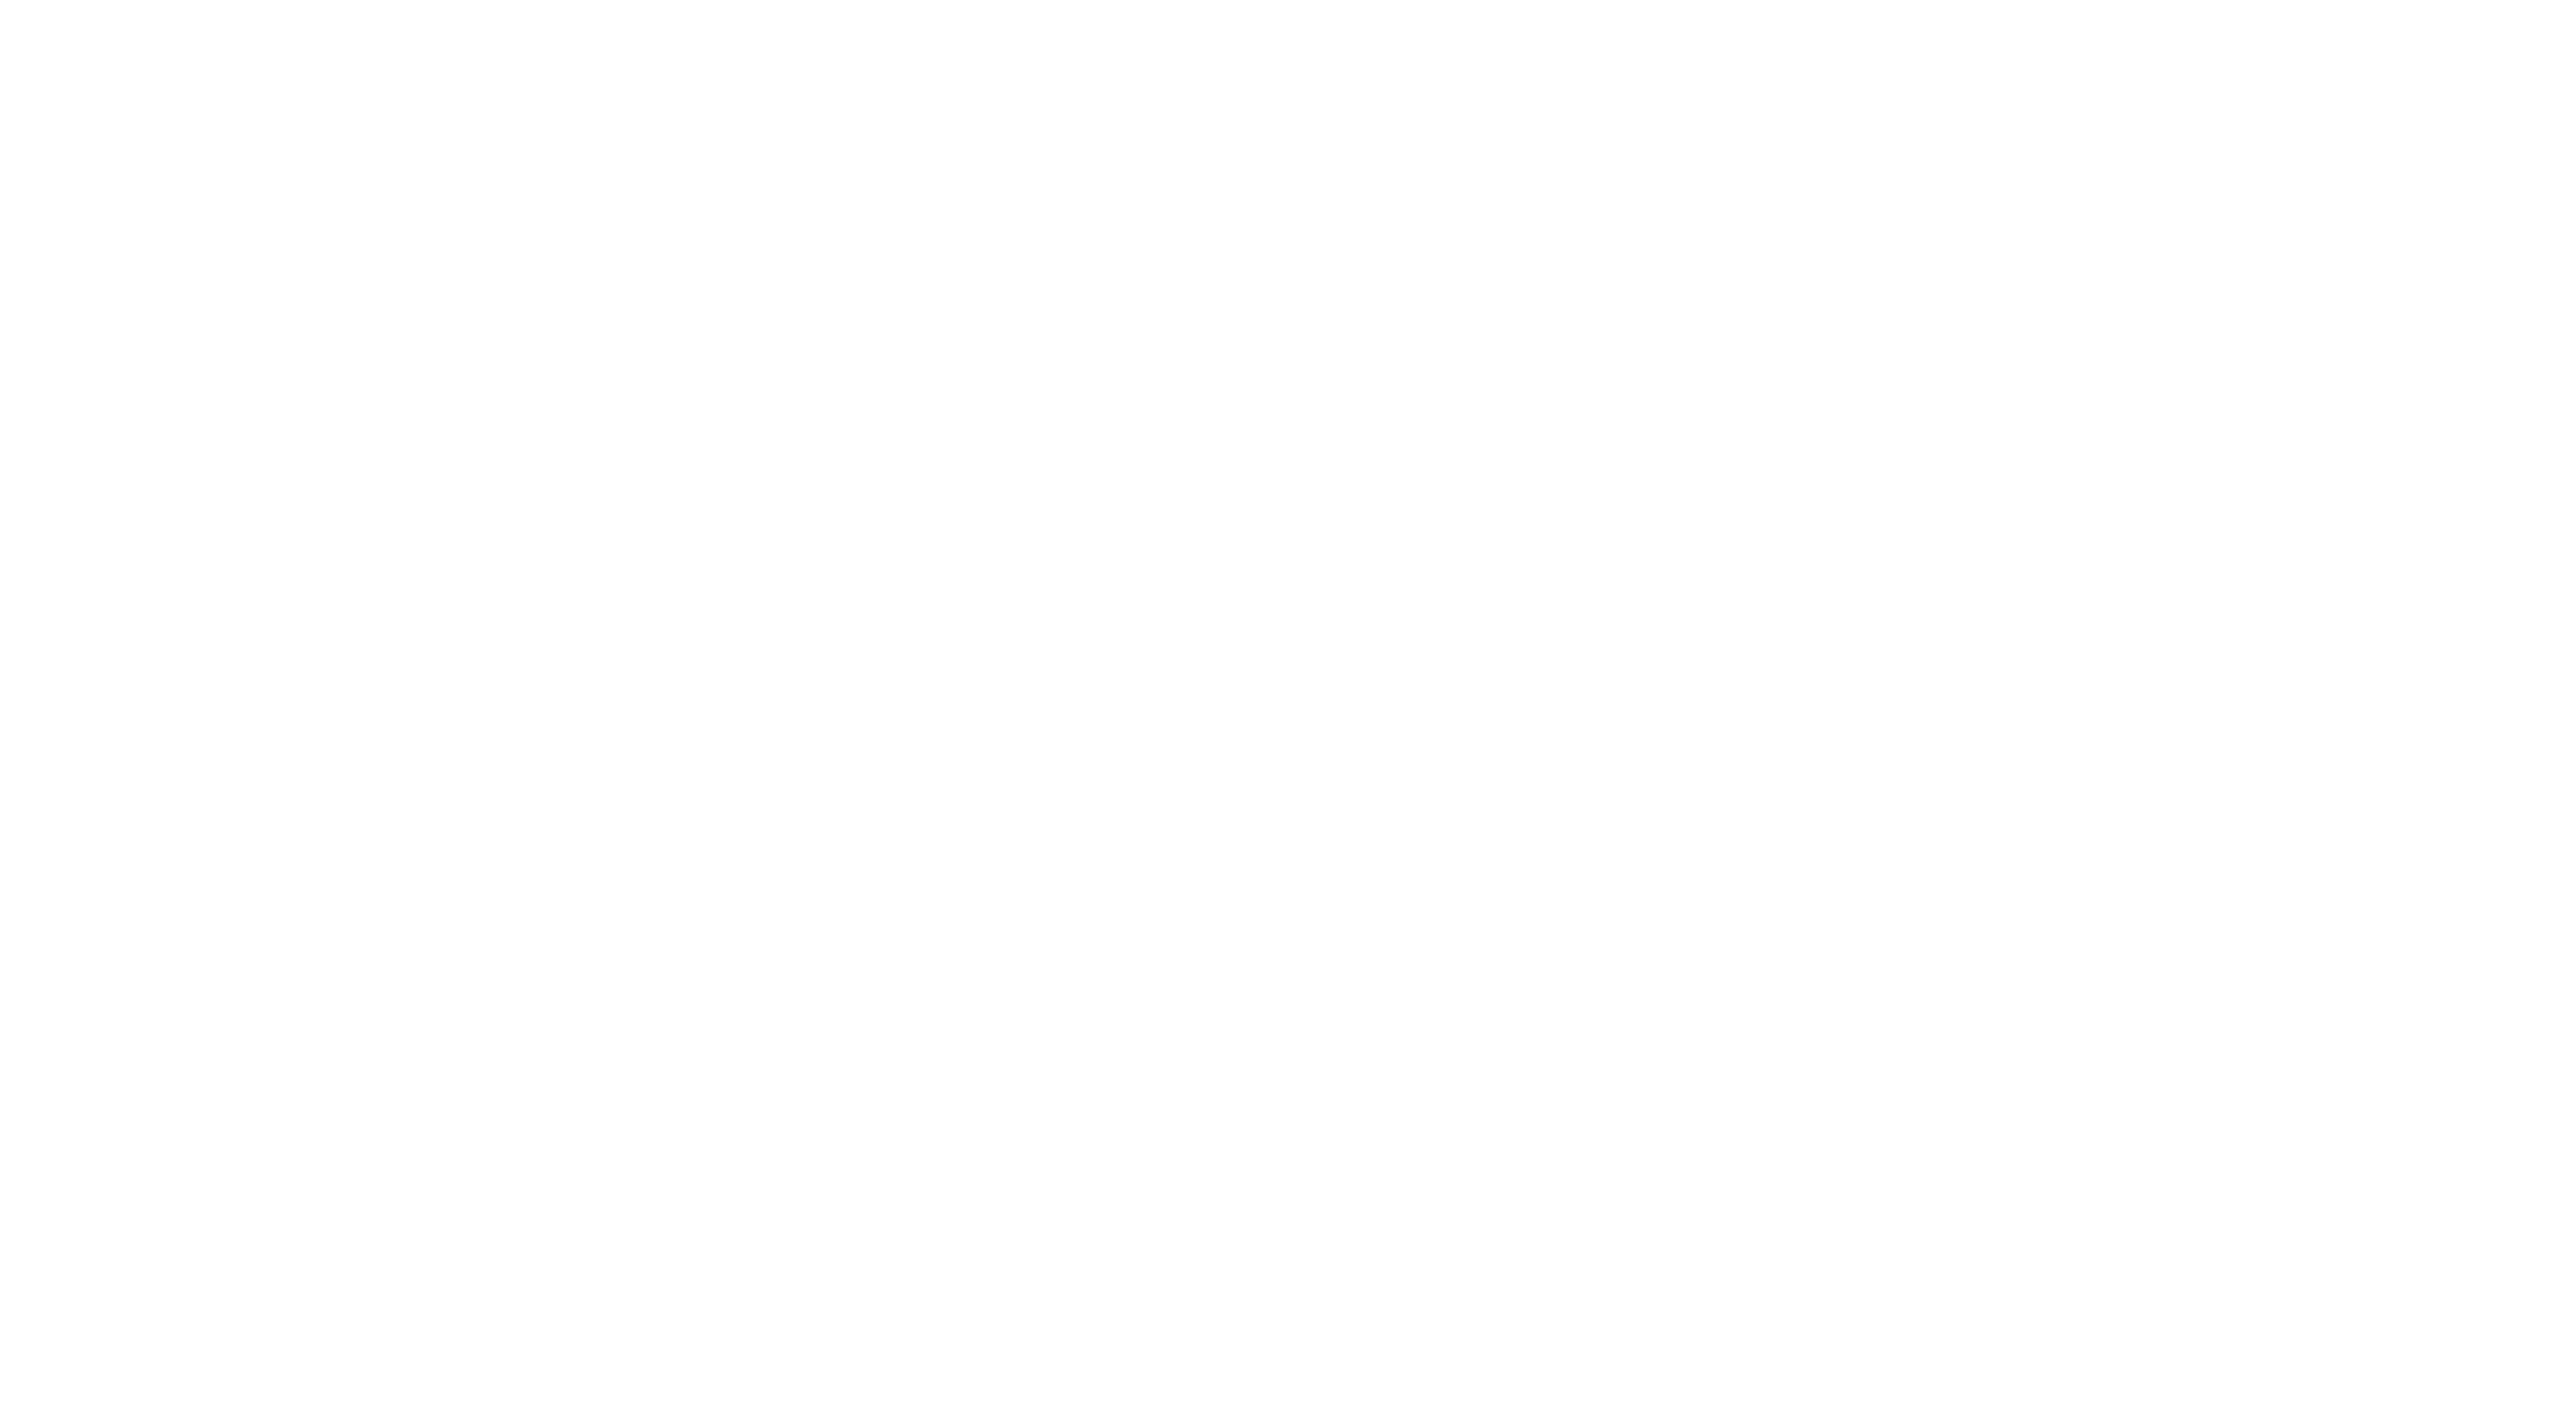 PrairieGrass at Jordan Creek logo